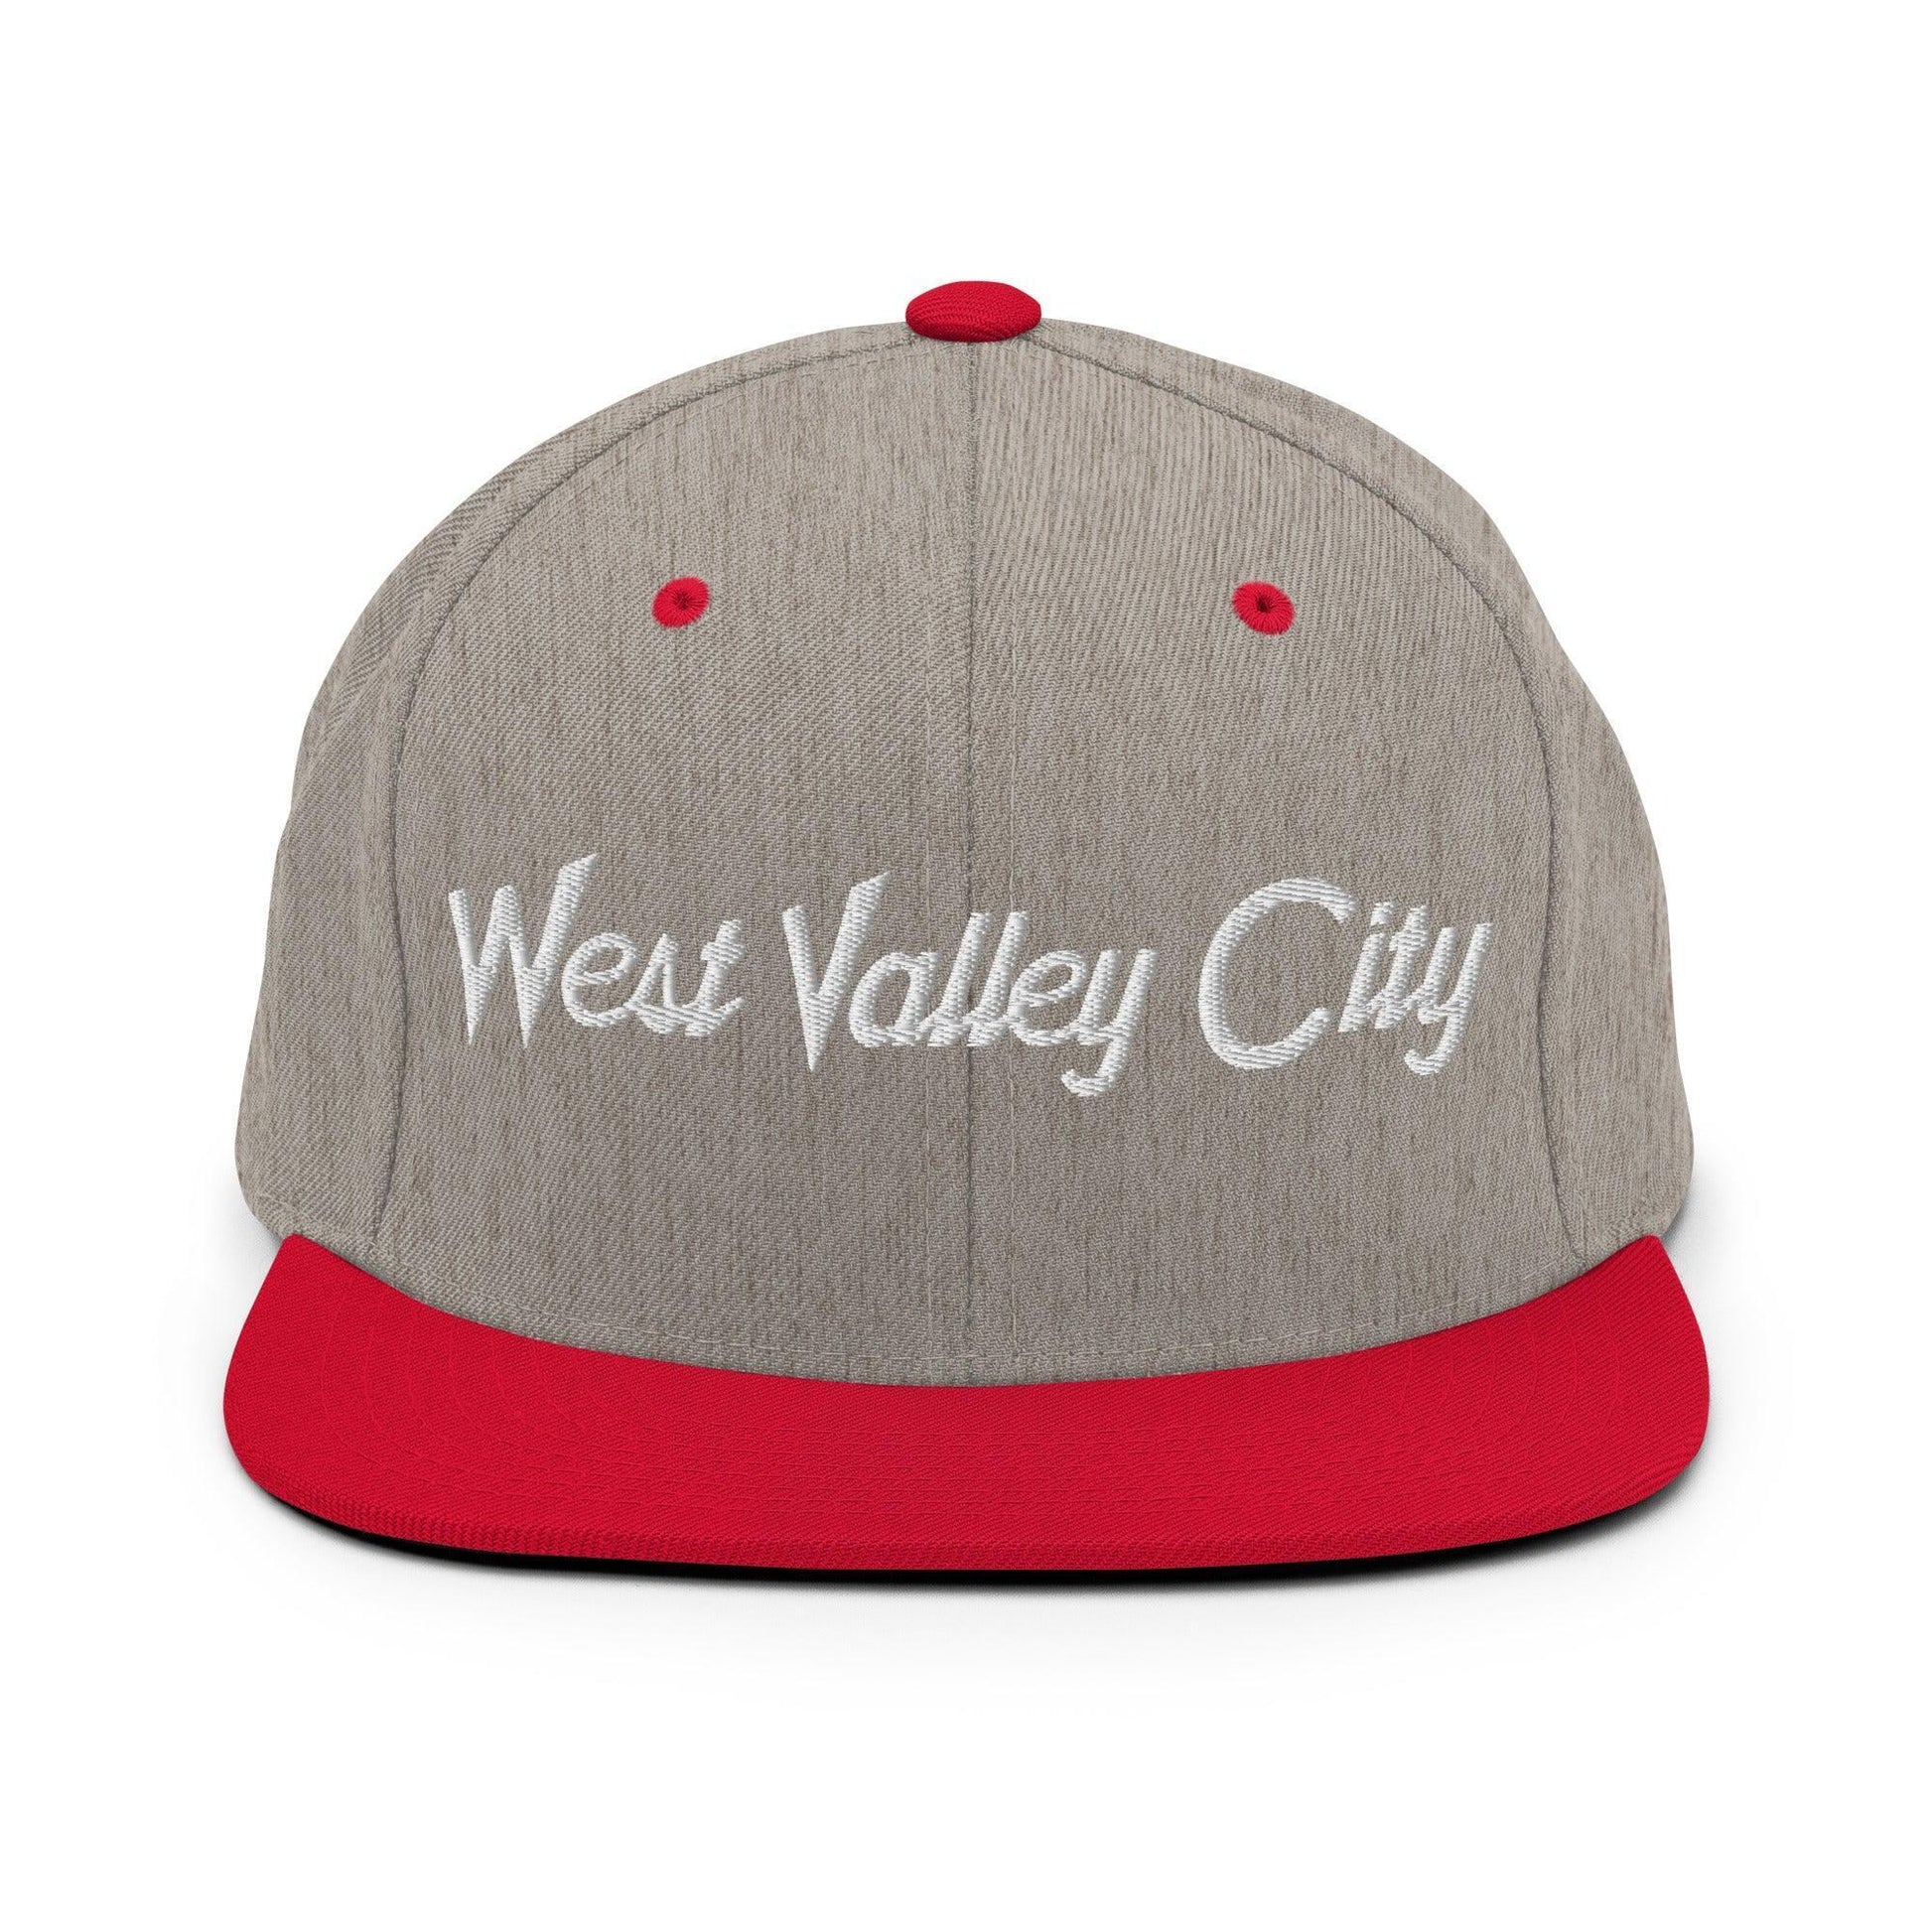 West Valley City Script Snapback Hat Heather Grey/ Red